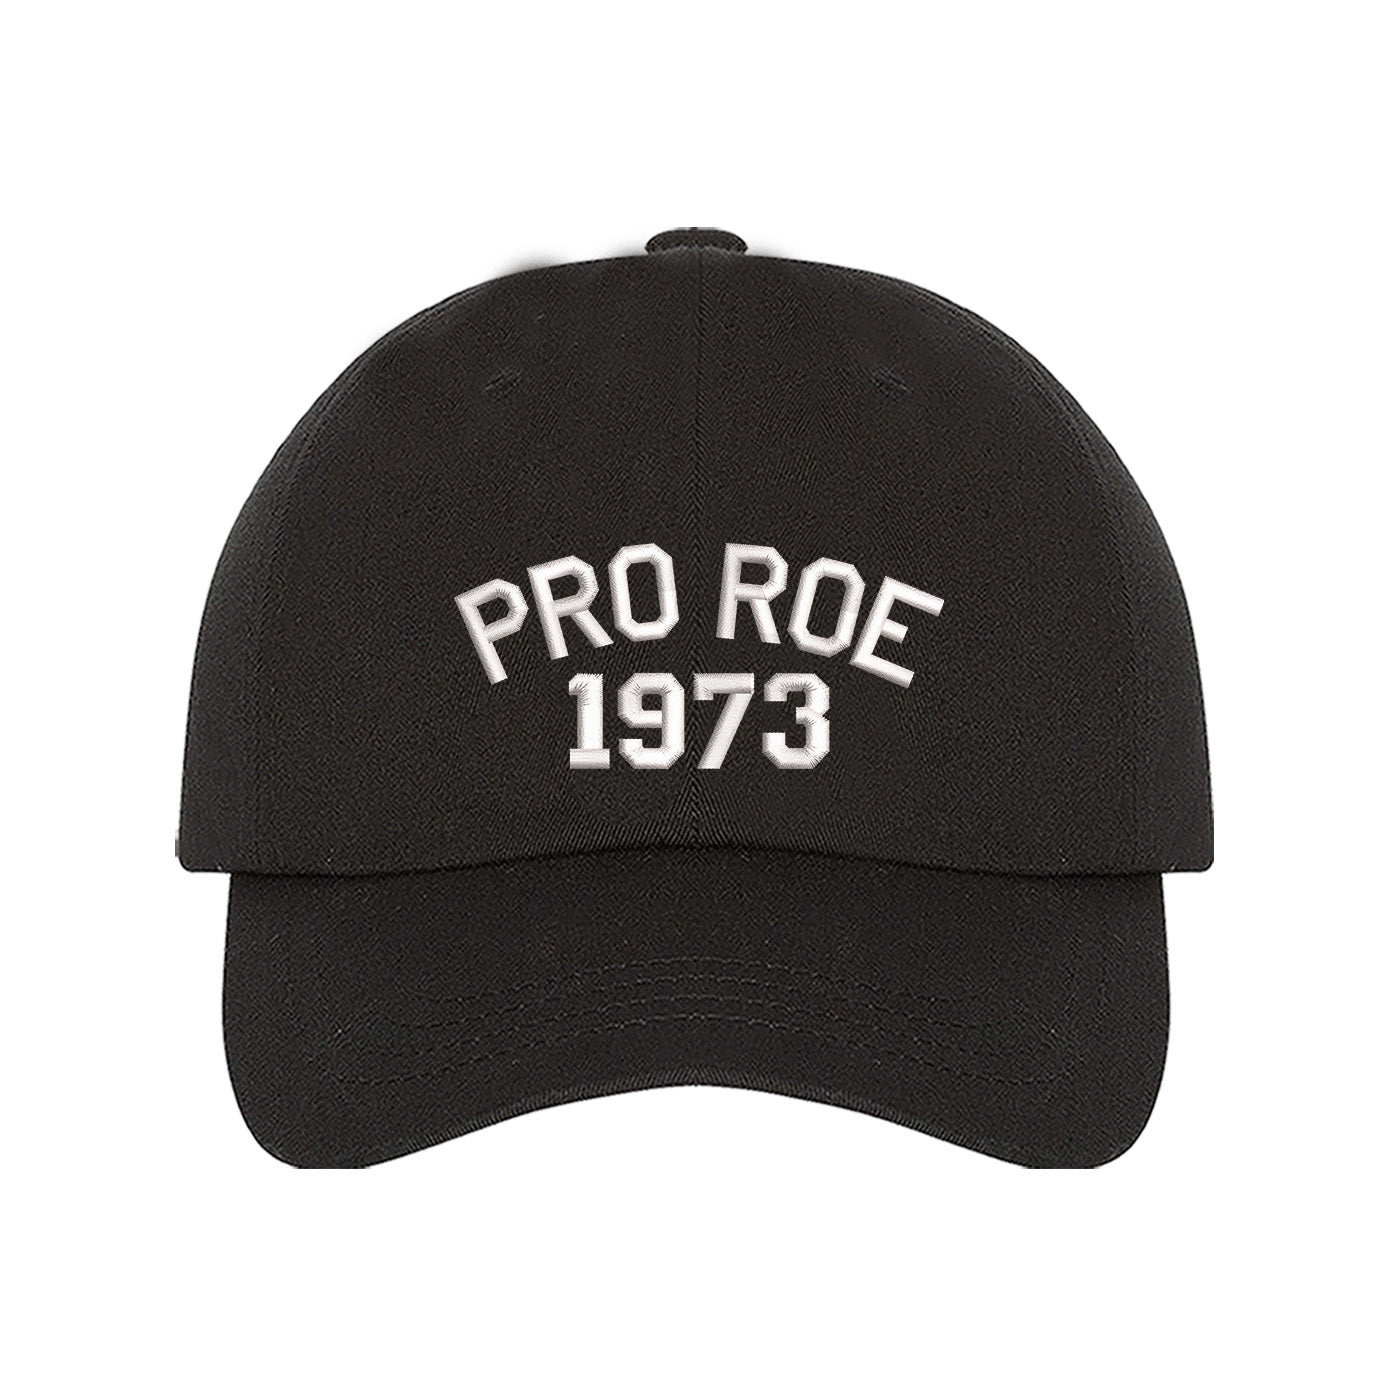 Pro Roe 1973 Black Embroidered Baseball Cap - DSY Lifesetyle